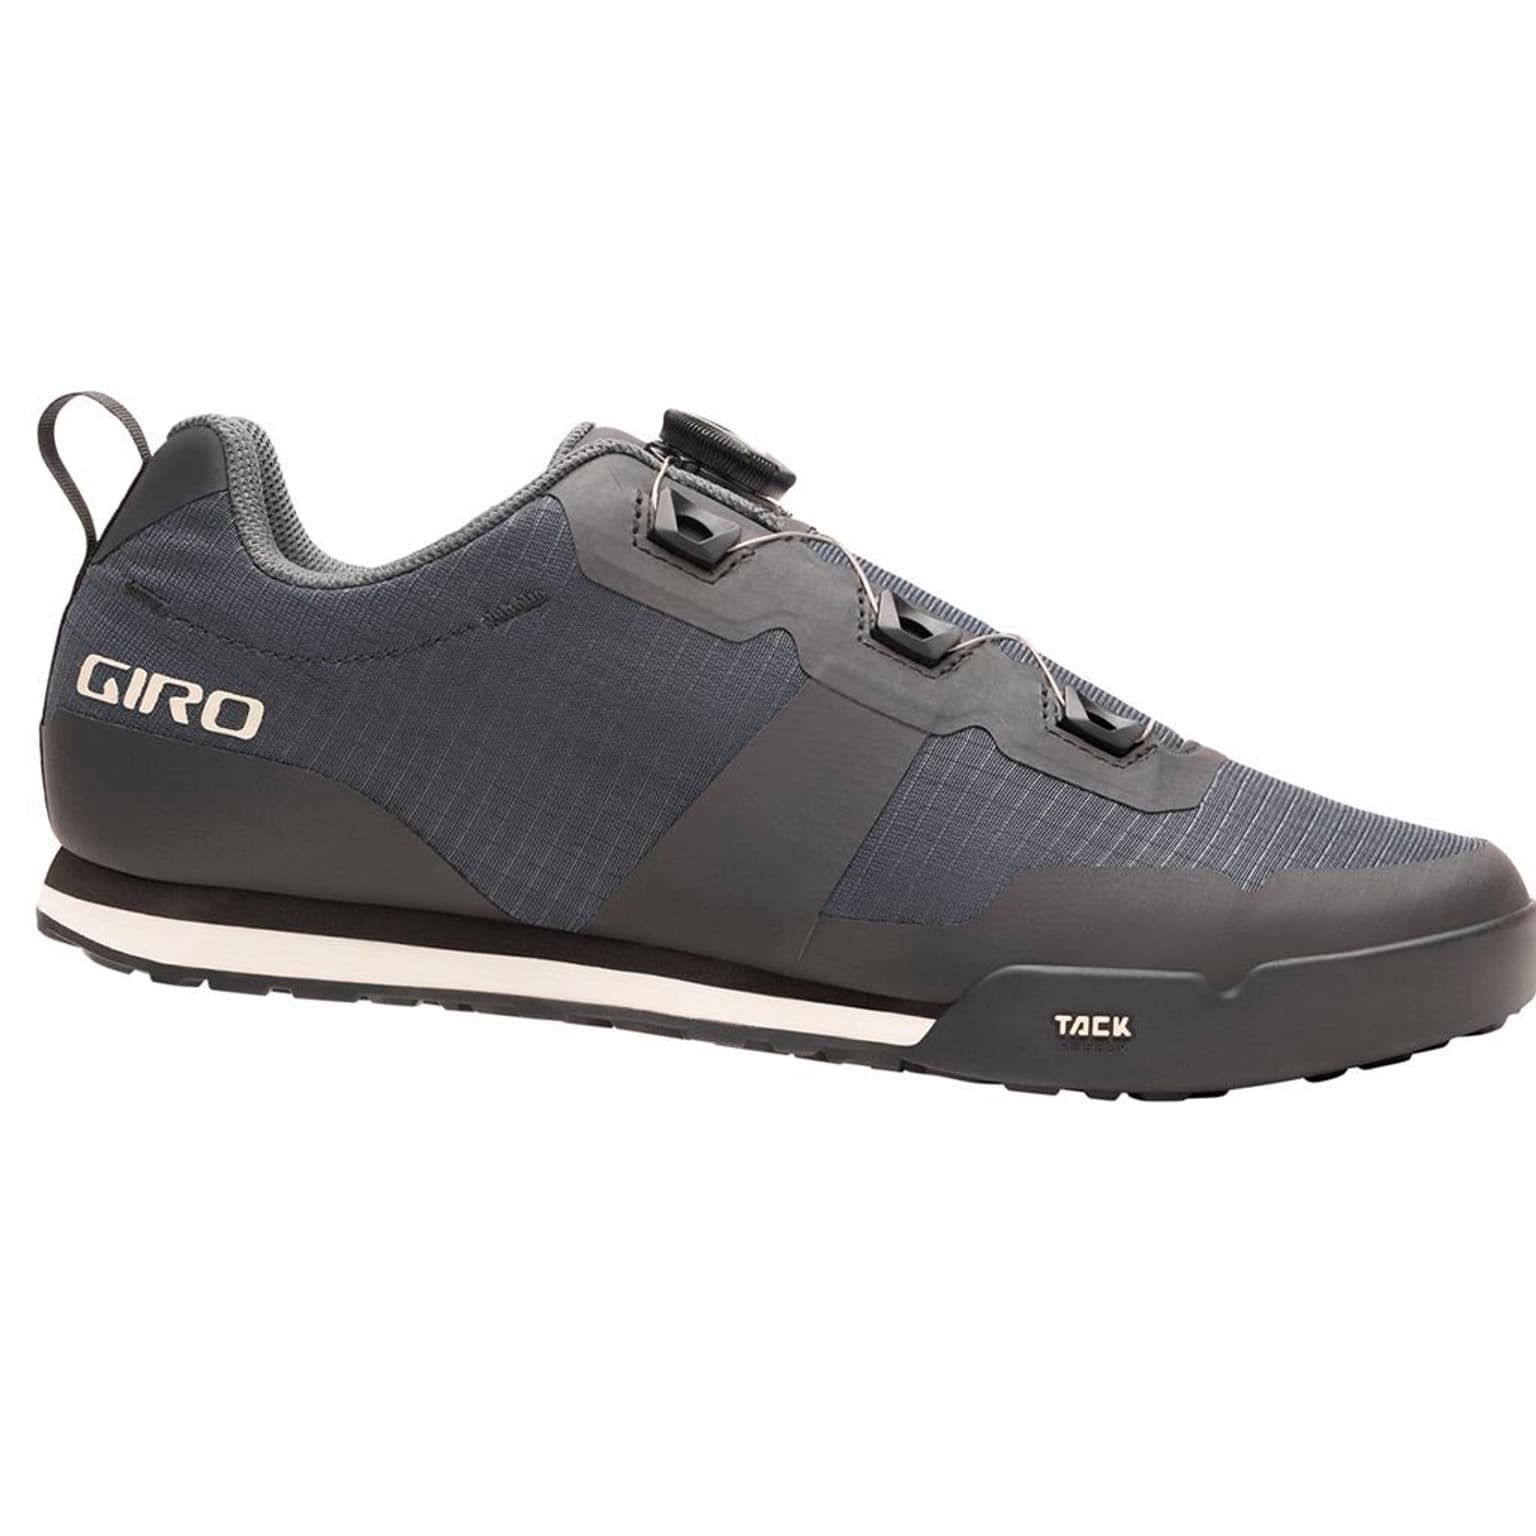 Giro Giro Tracker W Shoe Chaussures de cyclisme antracite 1